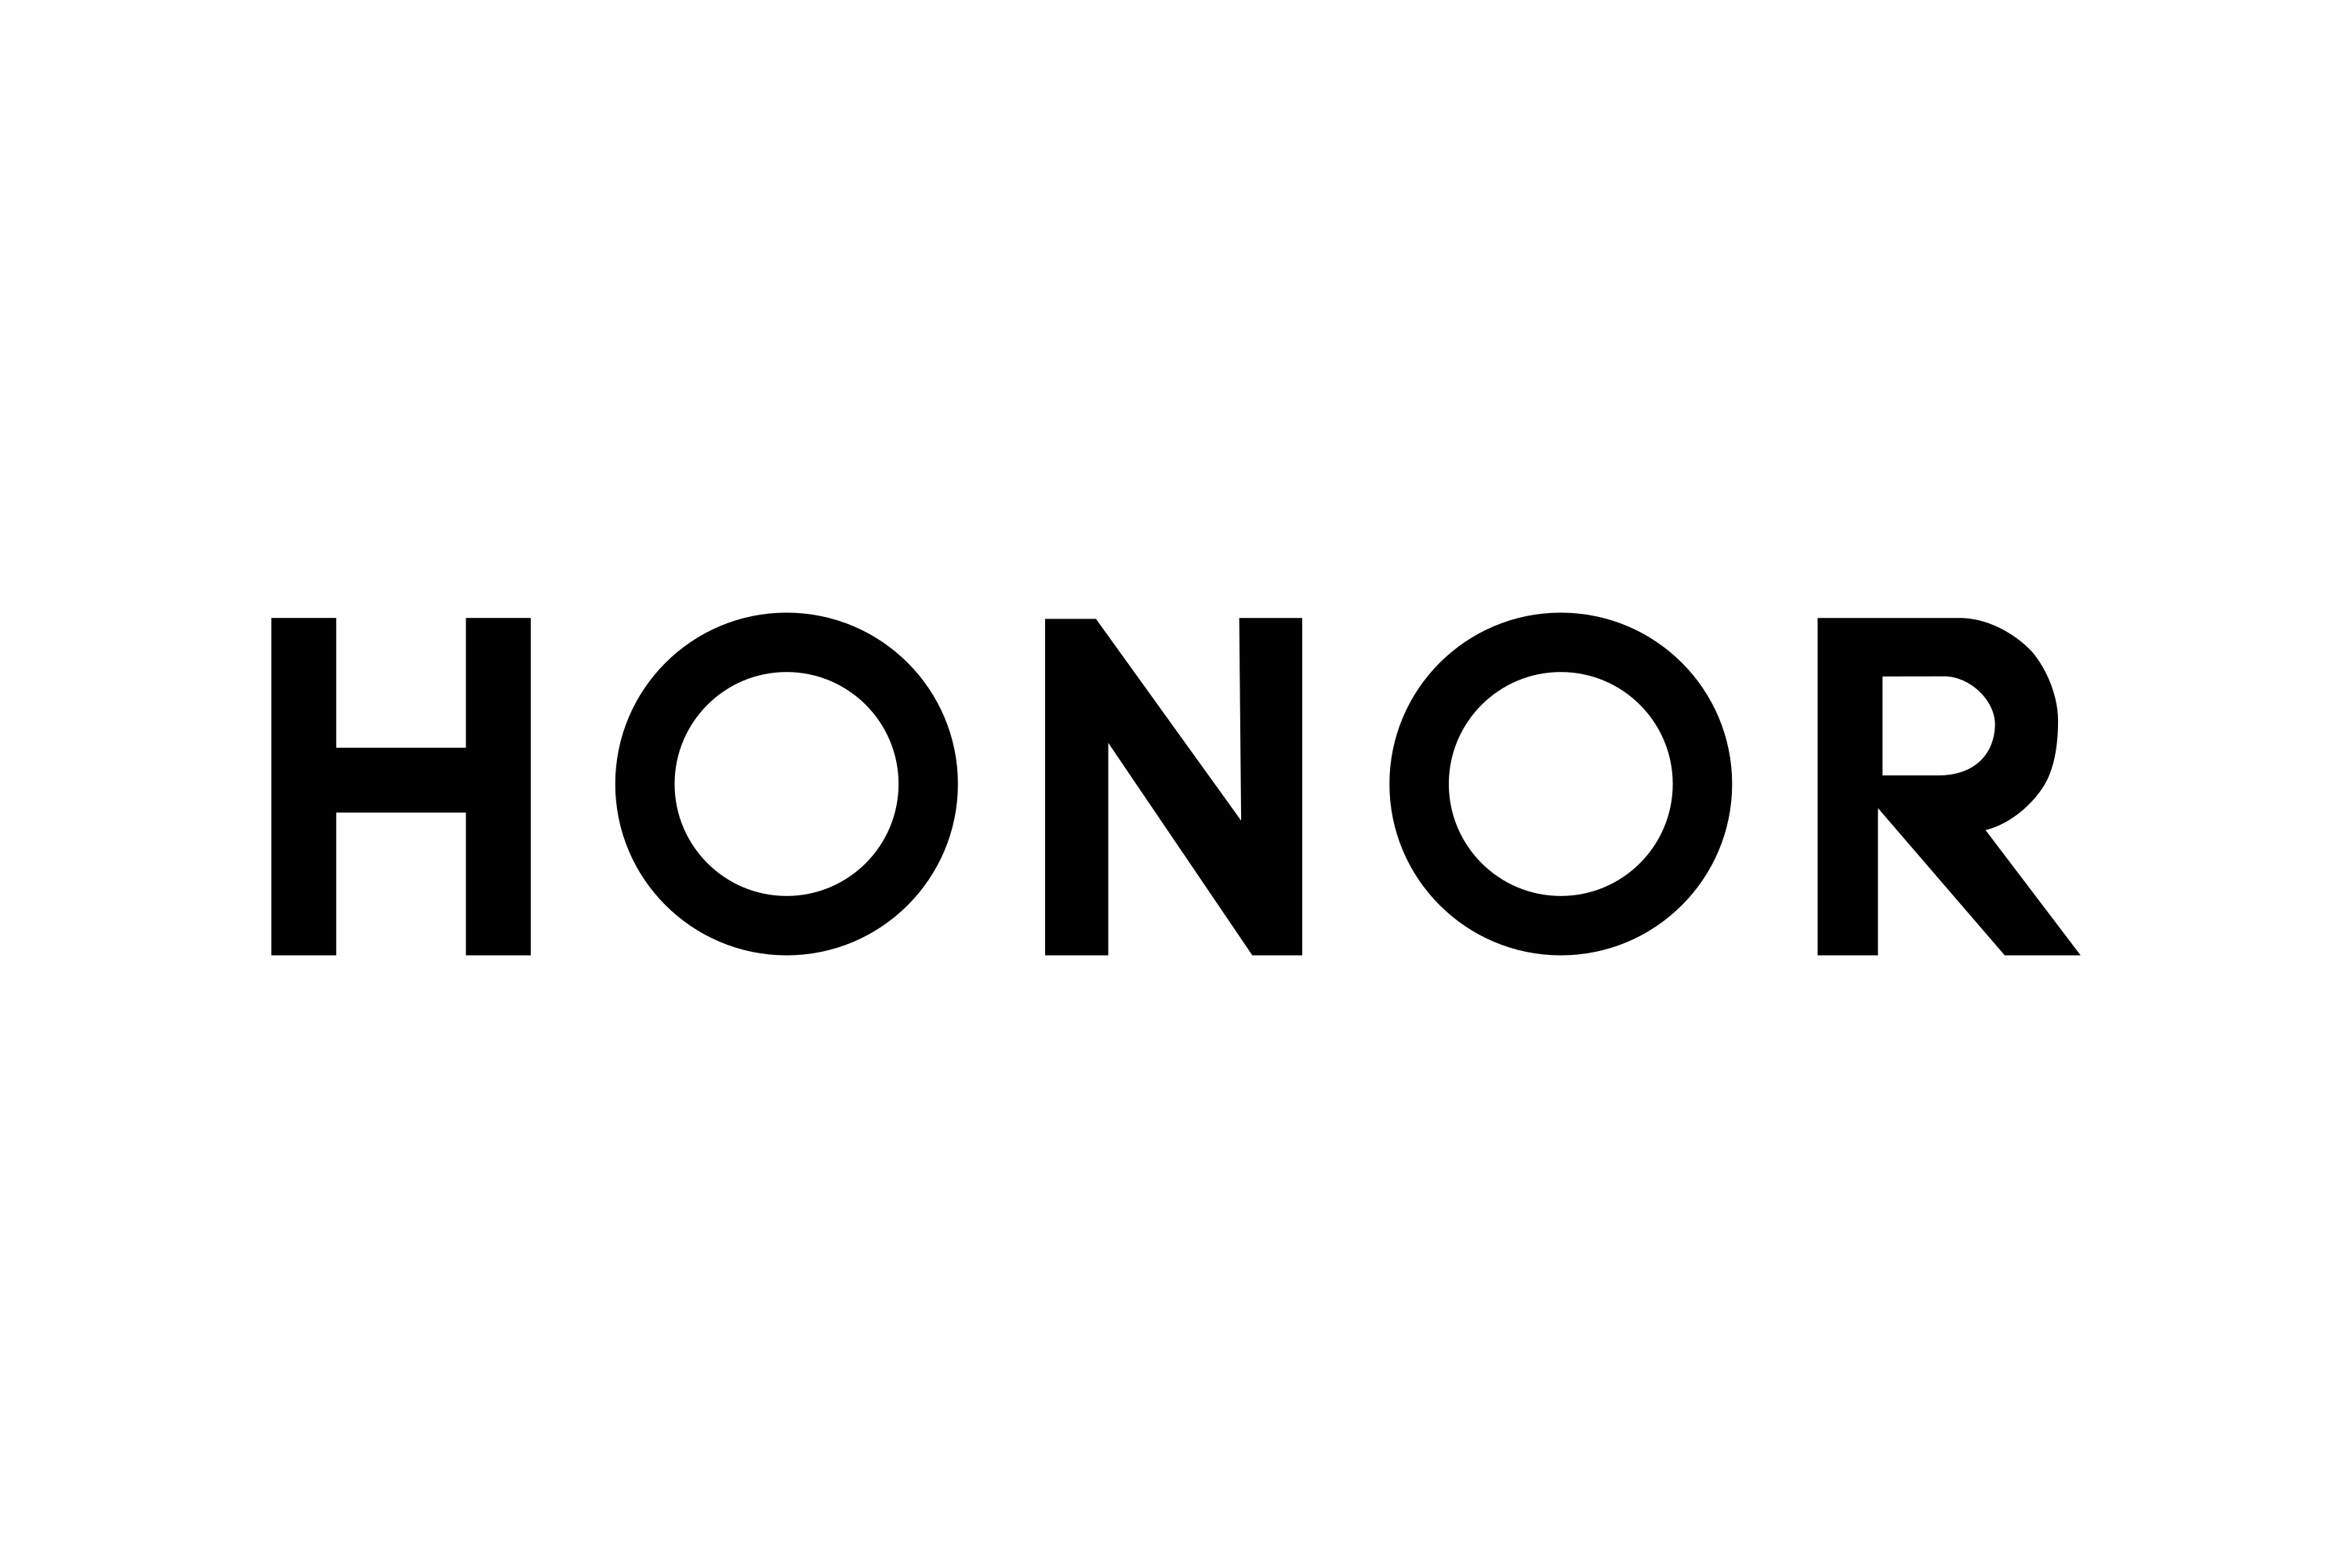 Download Honor Logo in SVG Vector or PNG File Format - Logo.wine